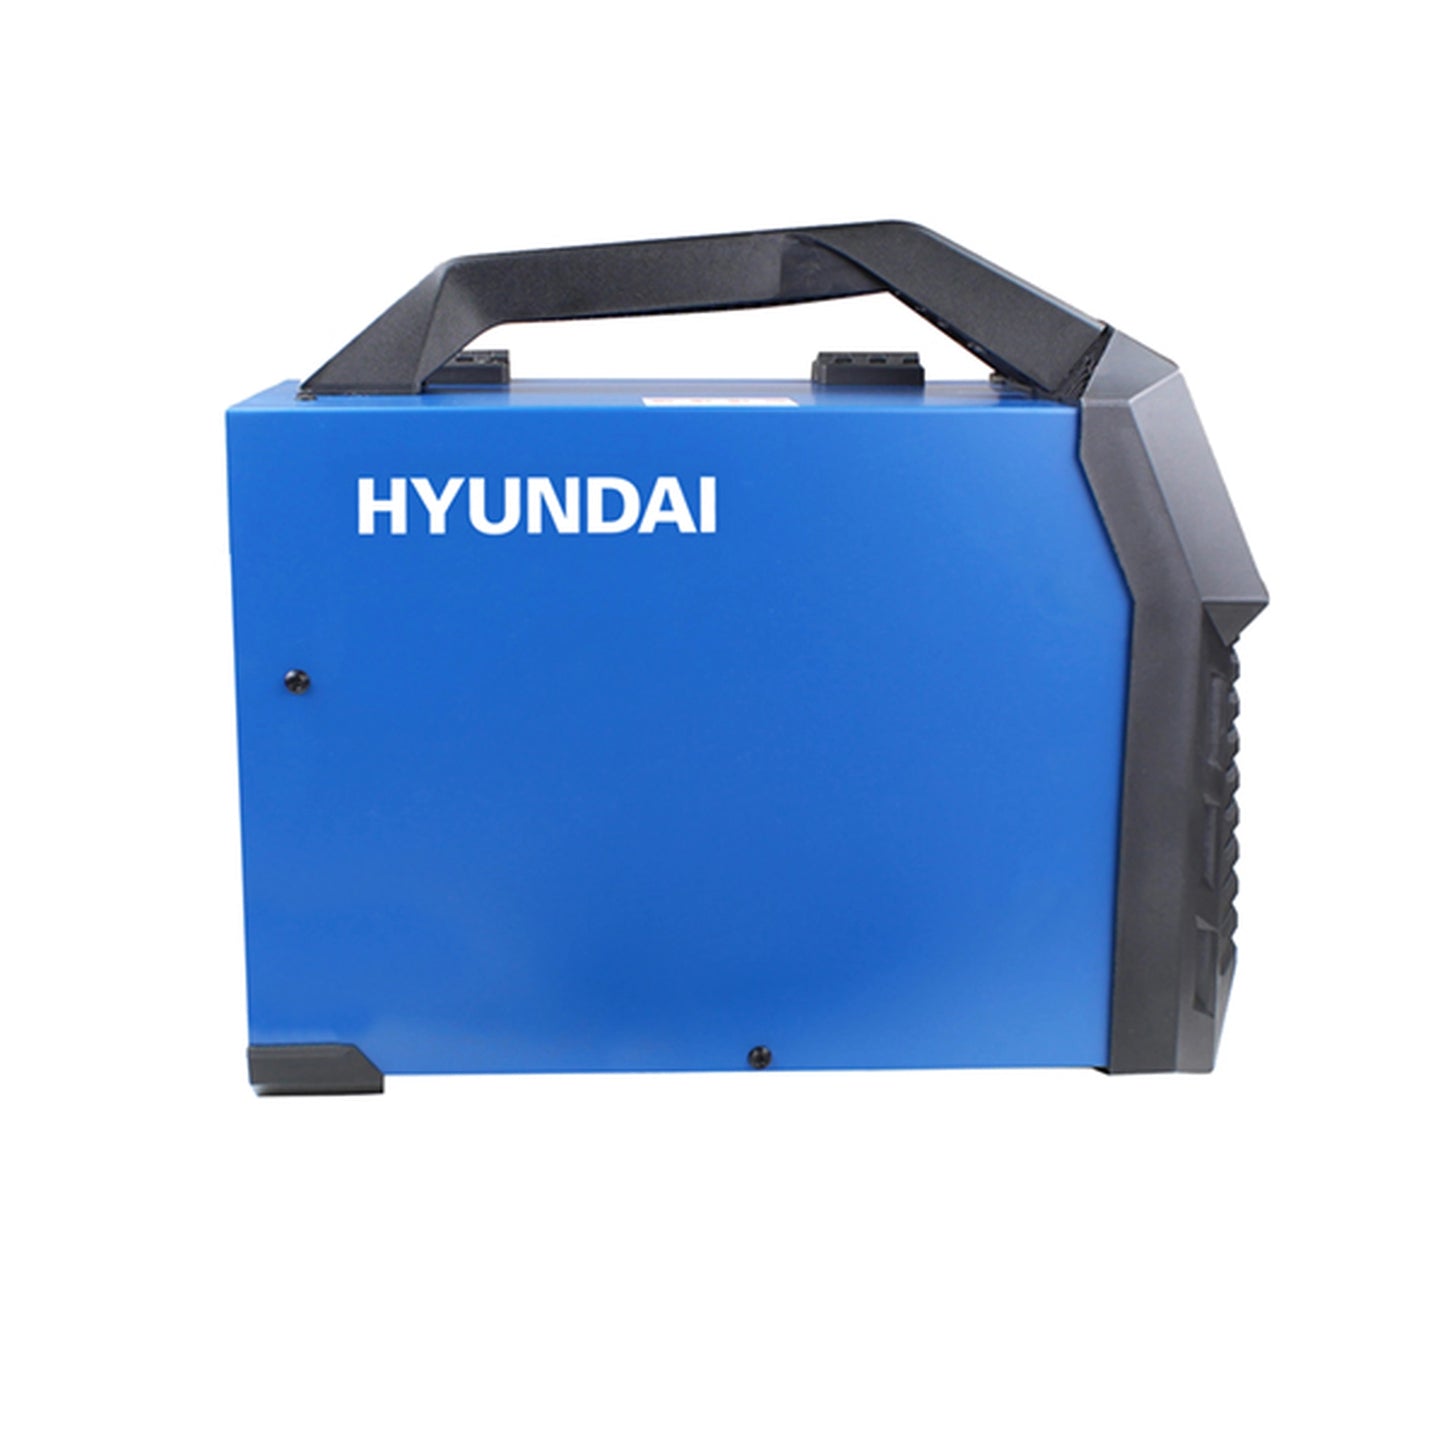 Hyundai HYMIG200 MIG/MMA(ARC) Inverter Welder